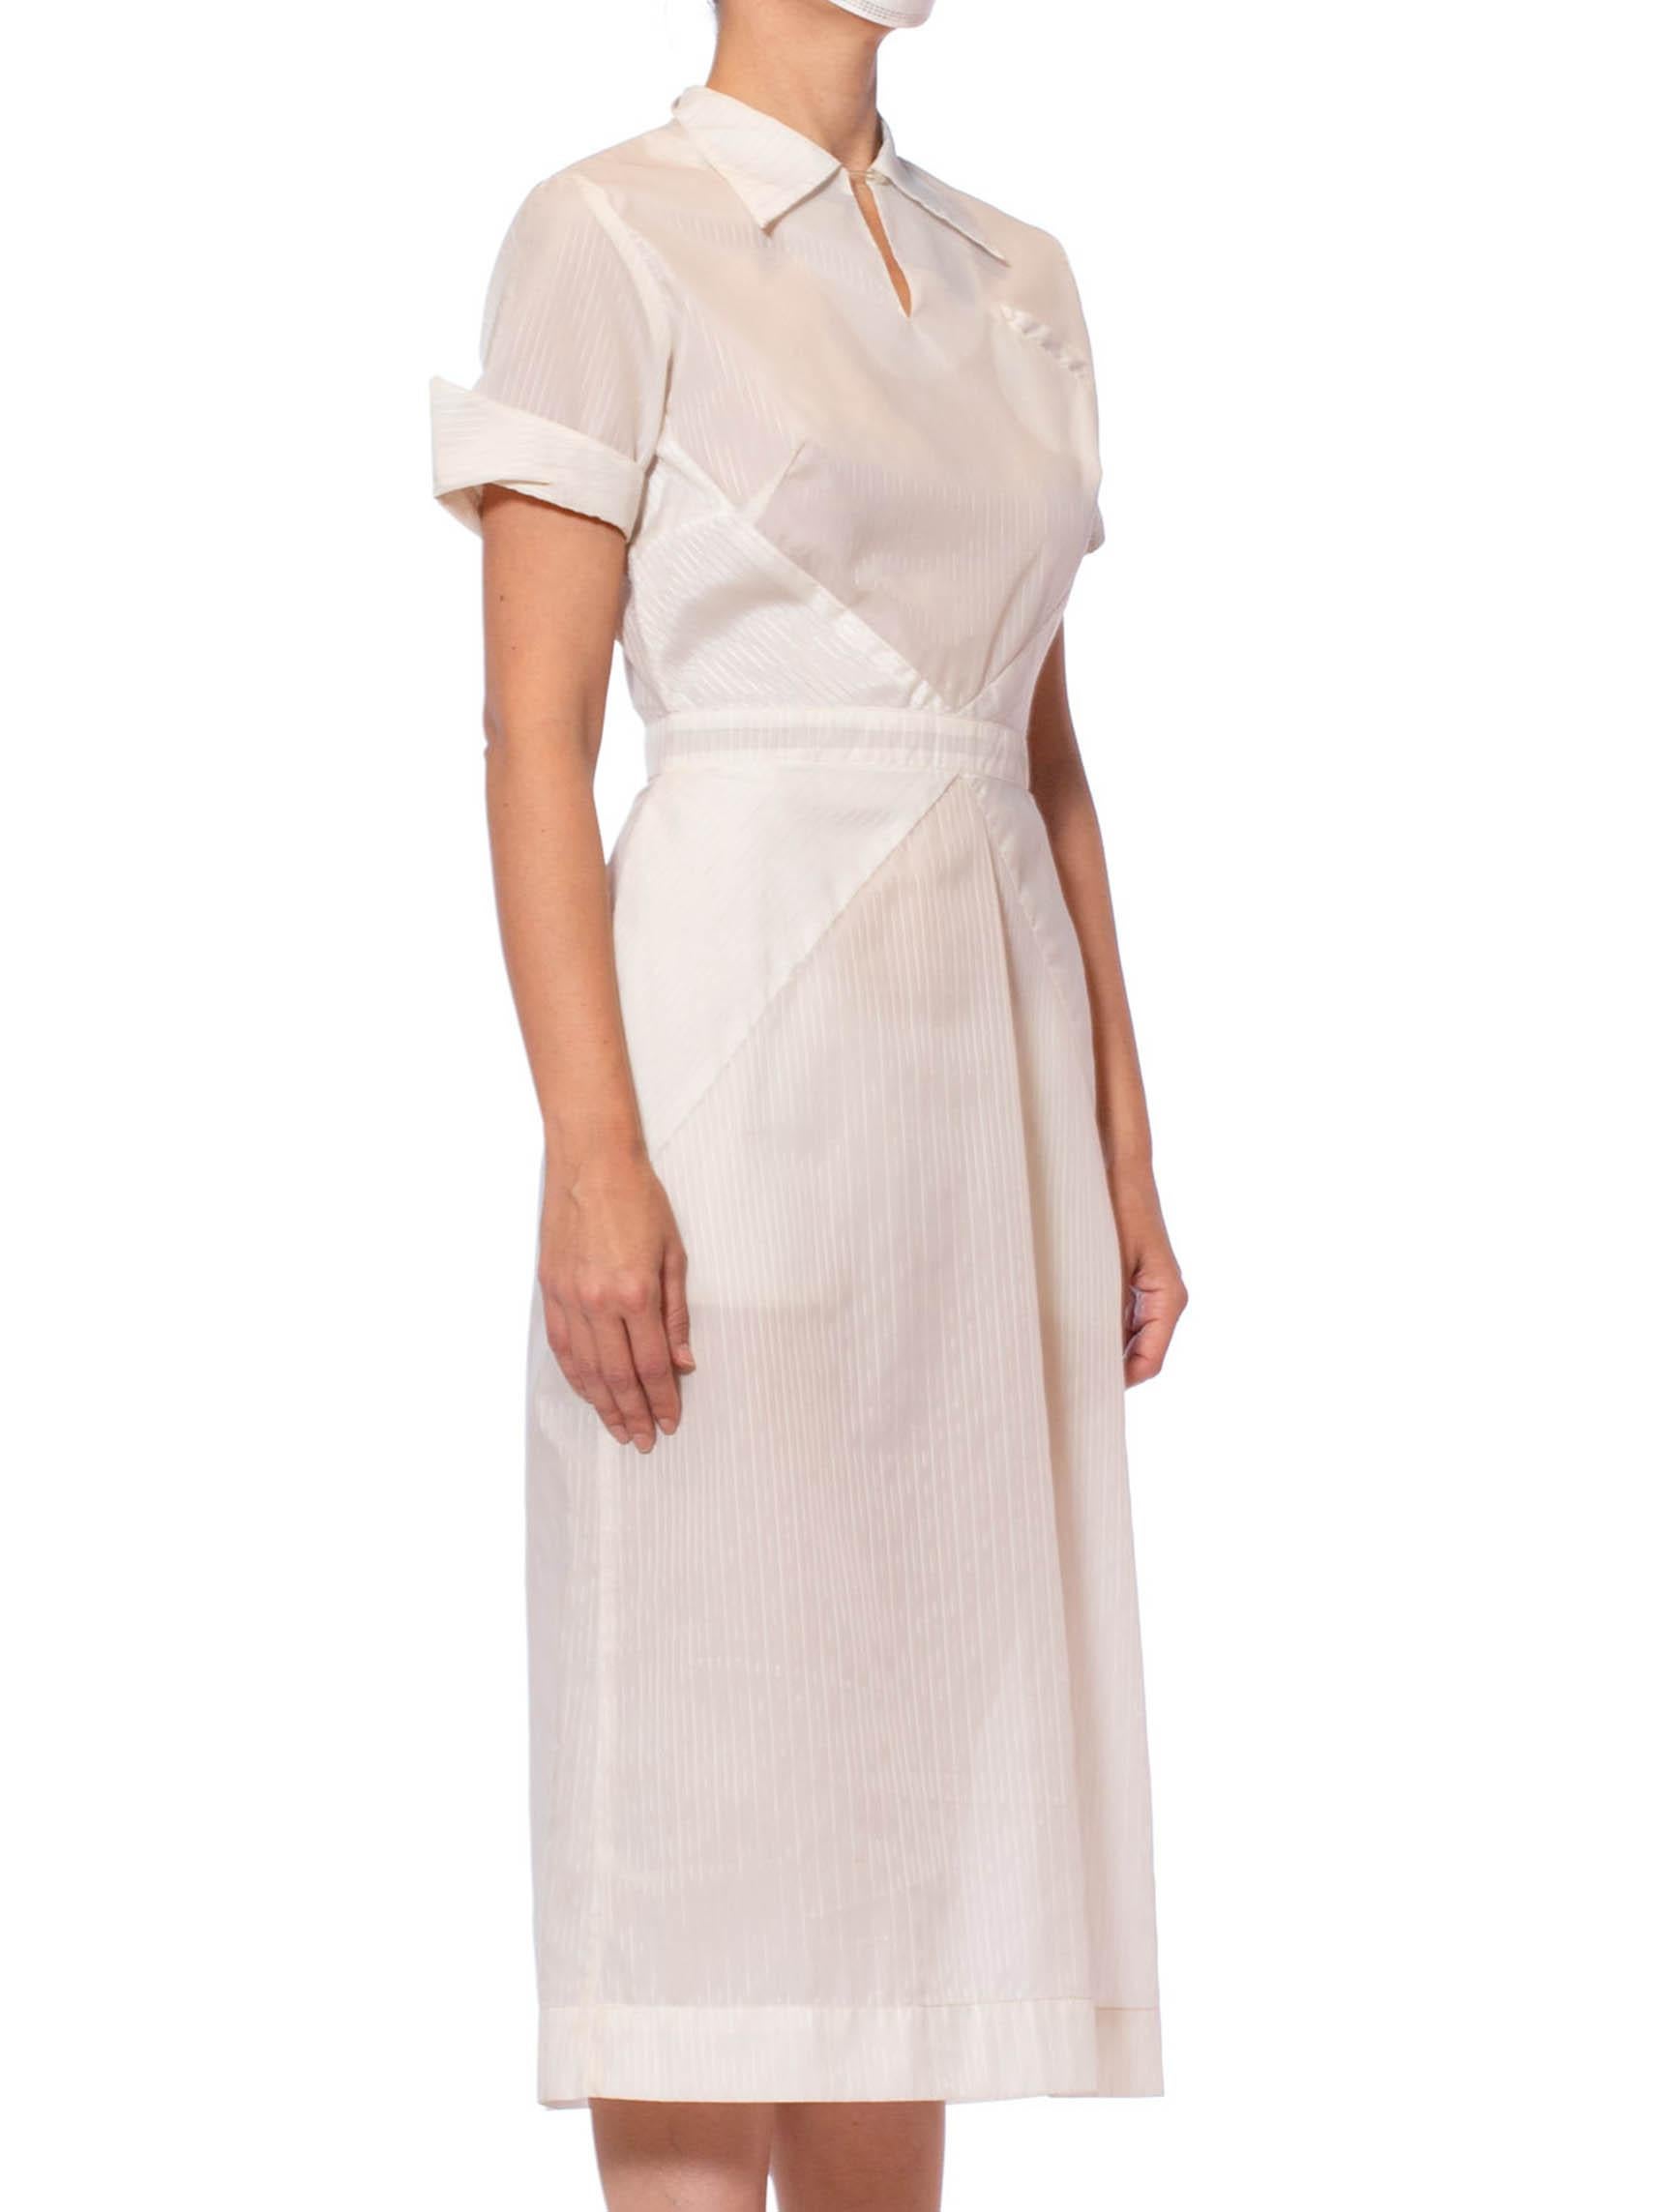 1950S White Nylon Pin-Up Nurse Uniform Dress For Sale 3